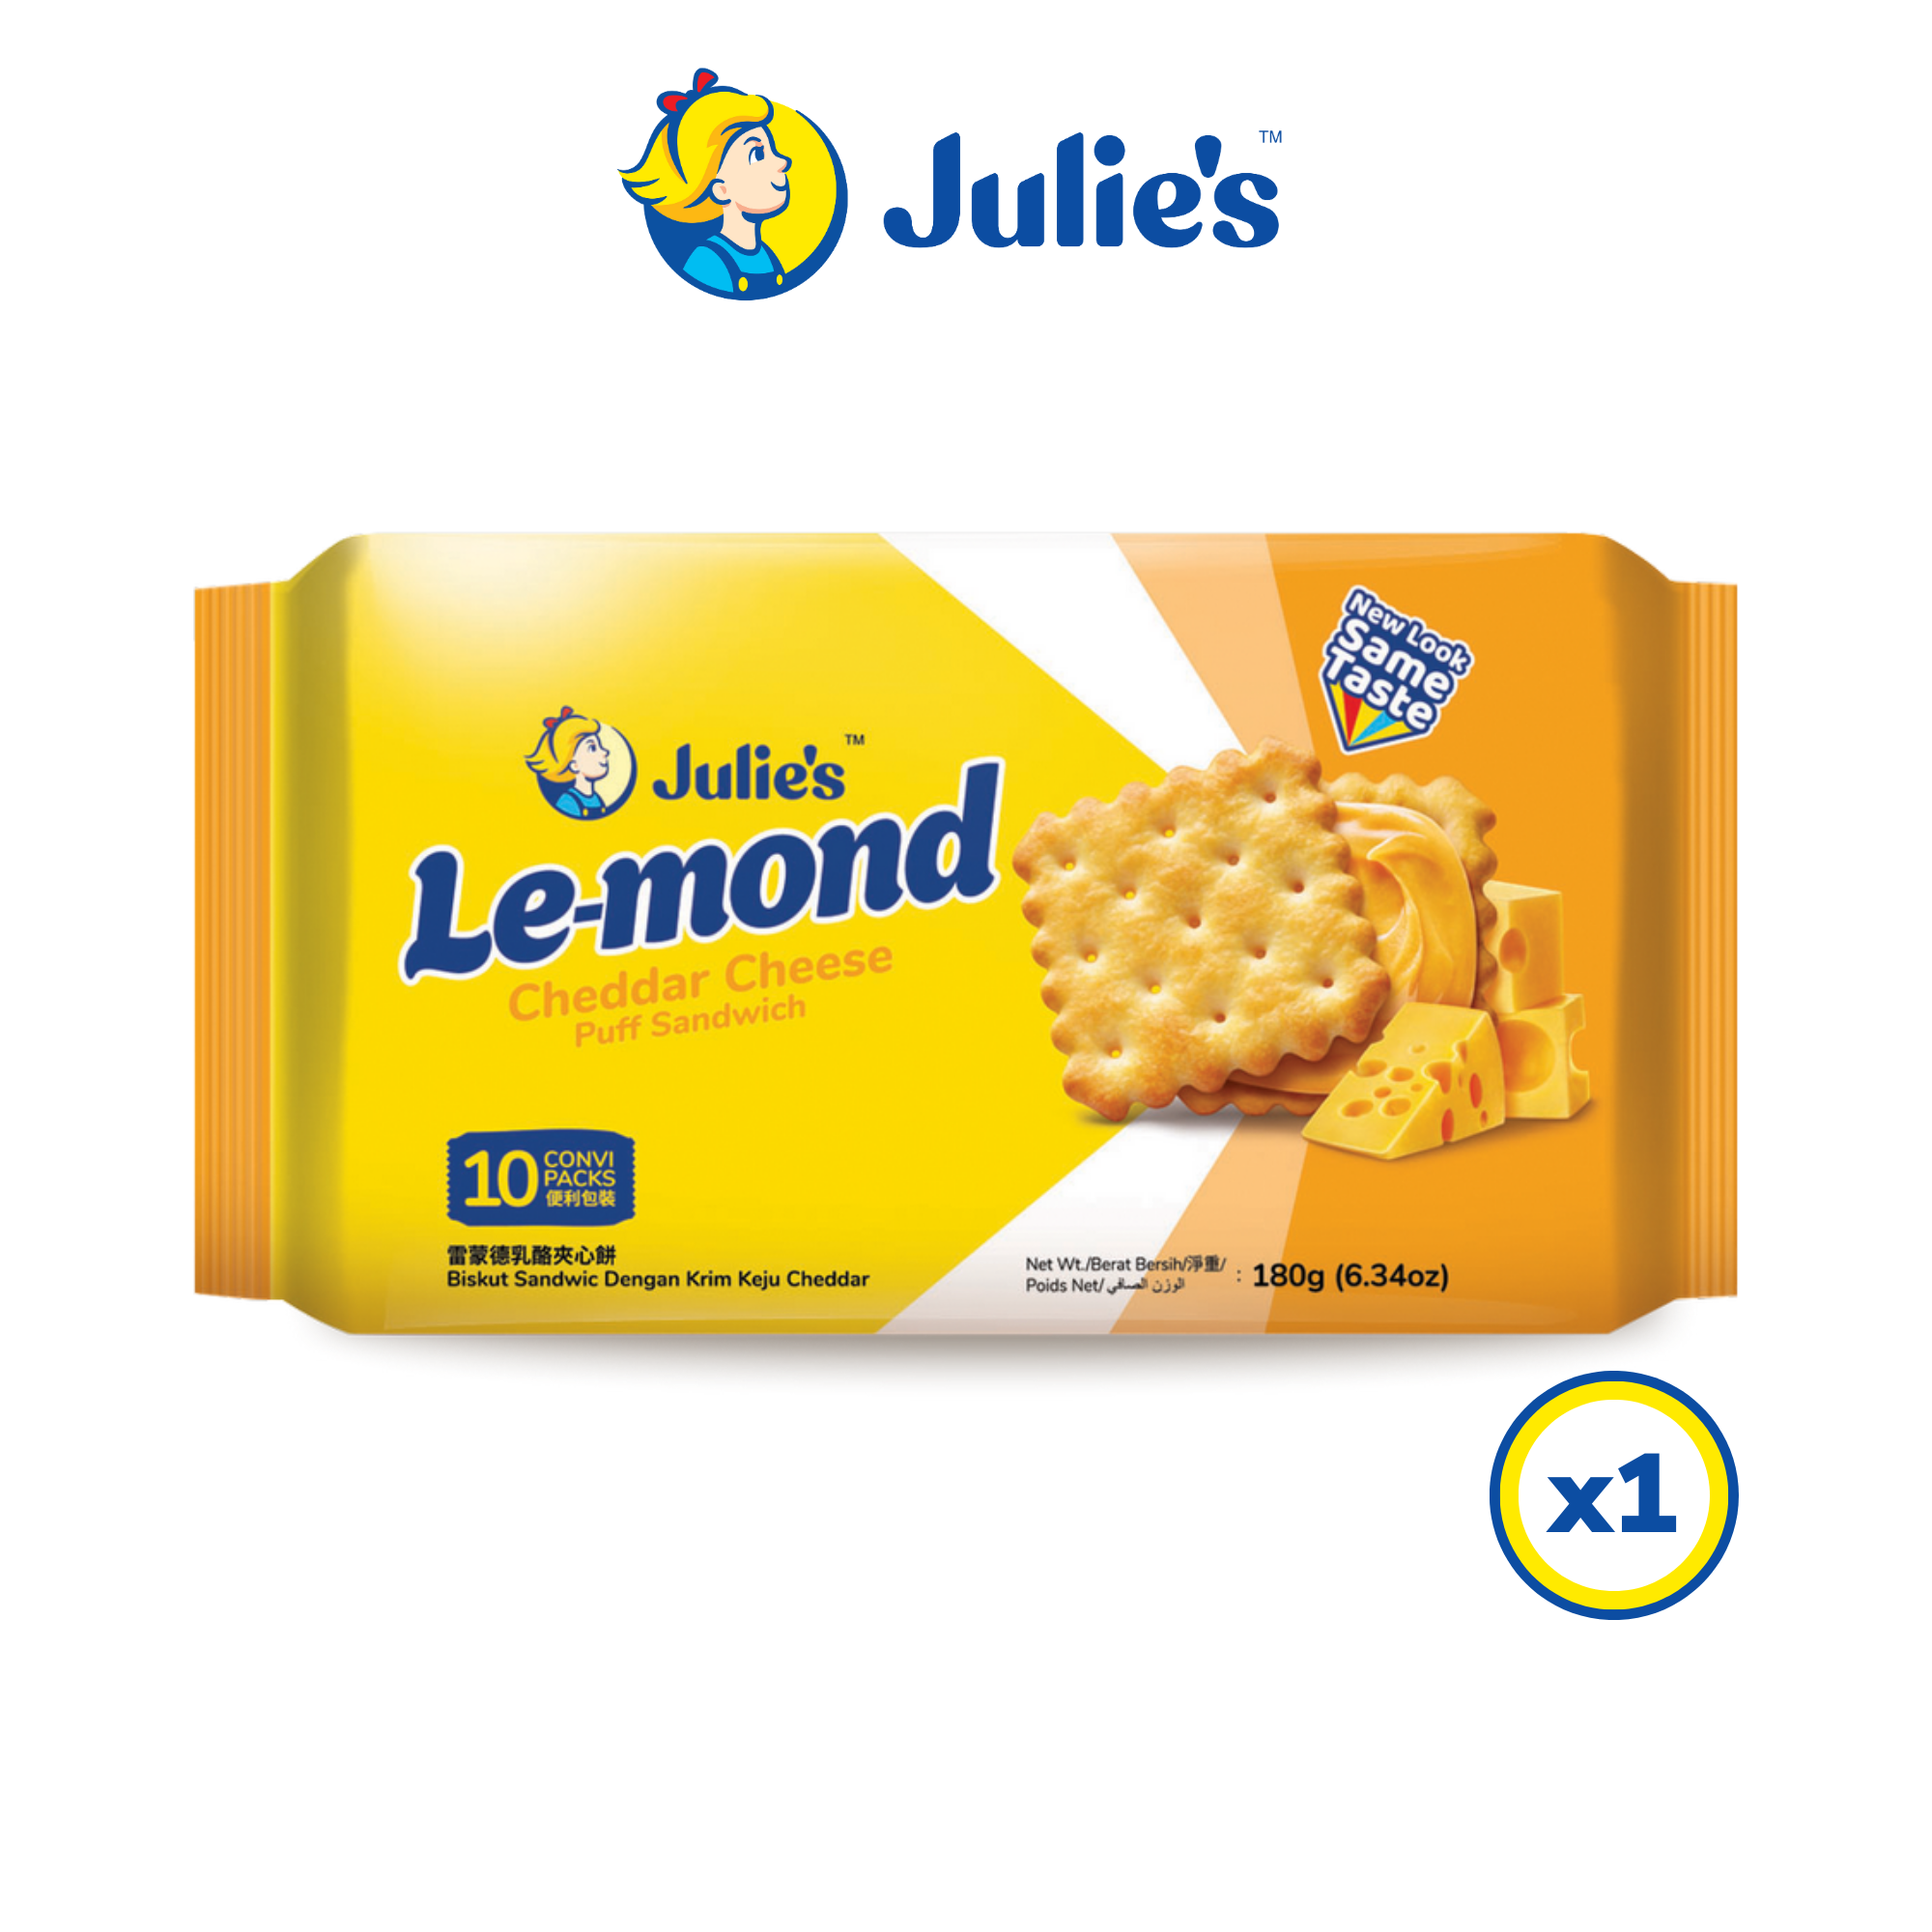 Julie's Le-mond Cheddar Cheese Puff Sandwich 180g x 1 pack